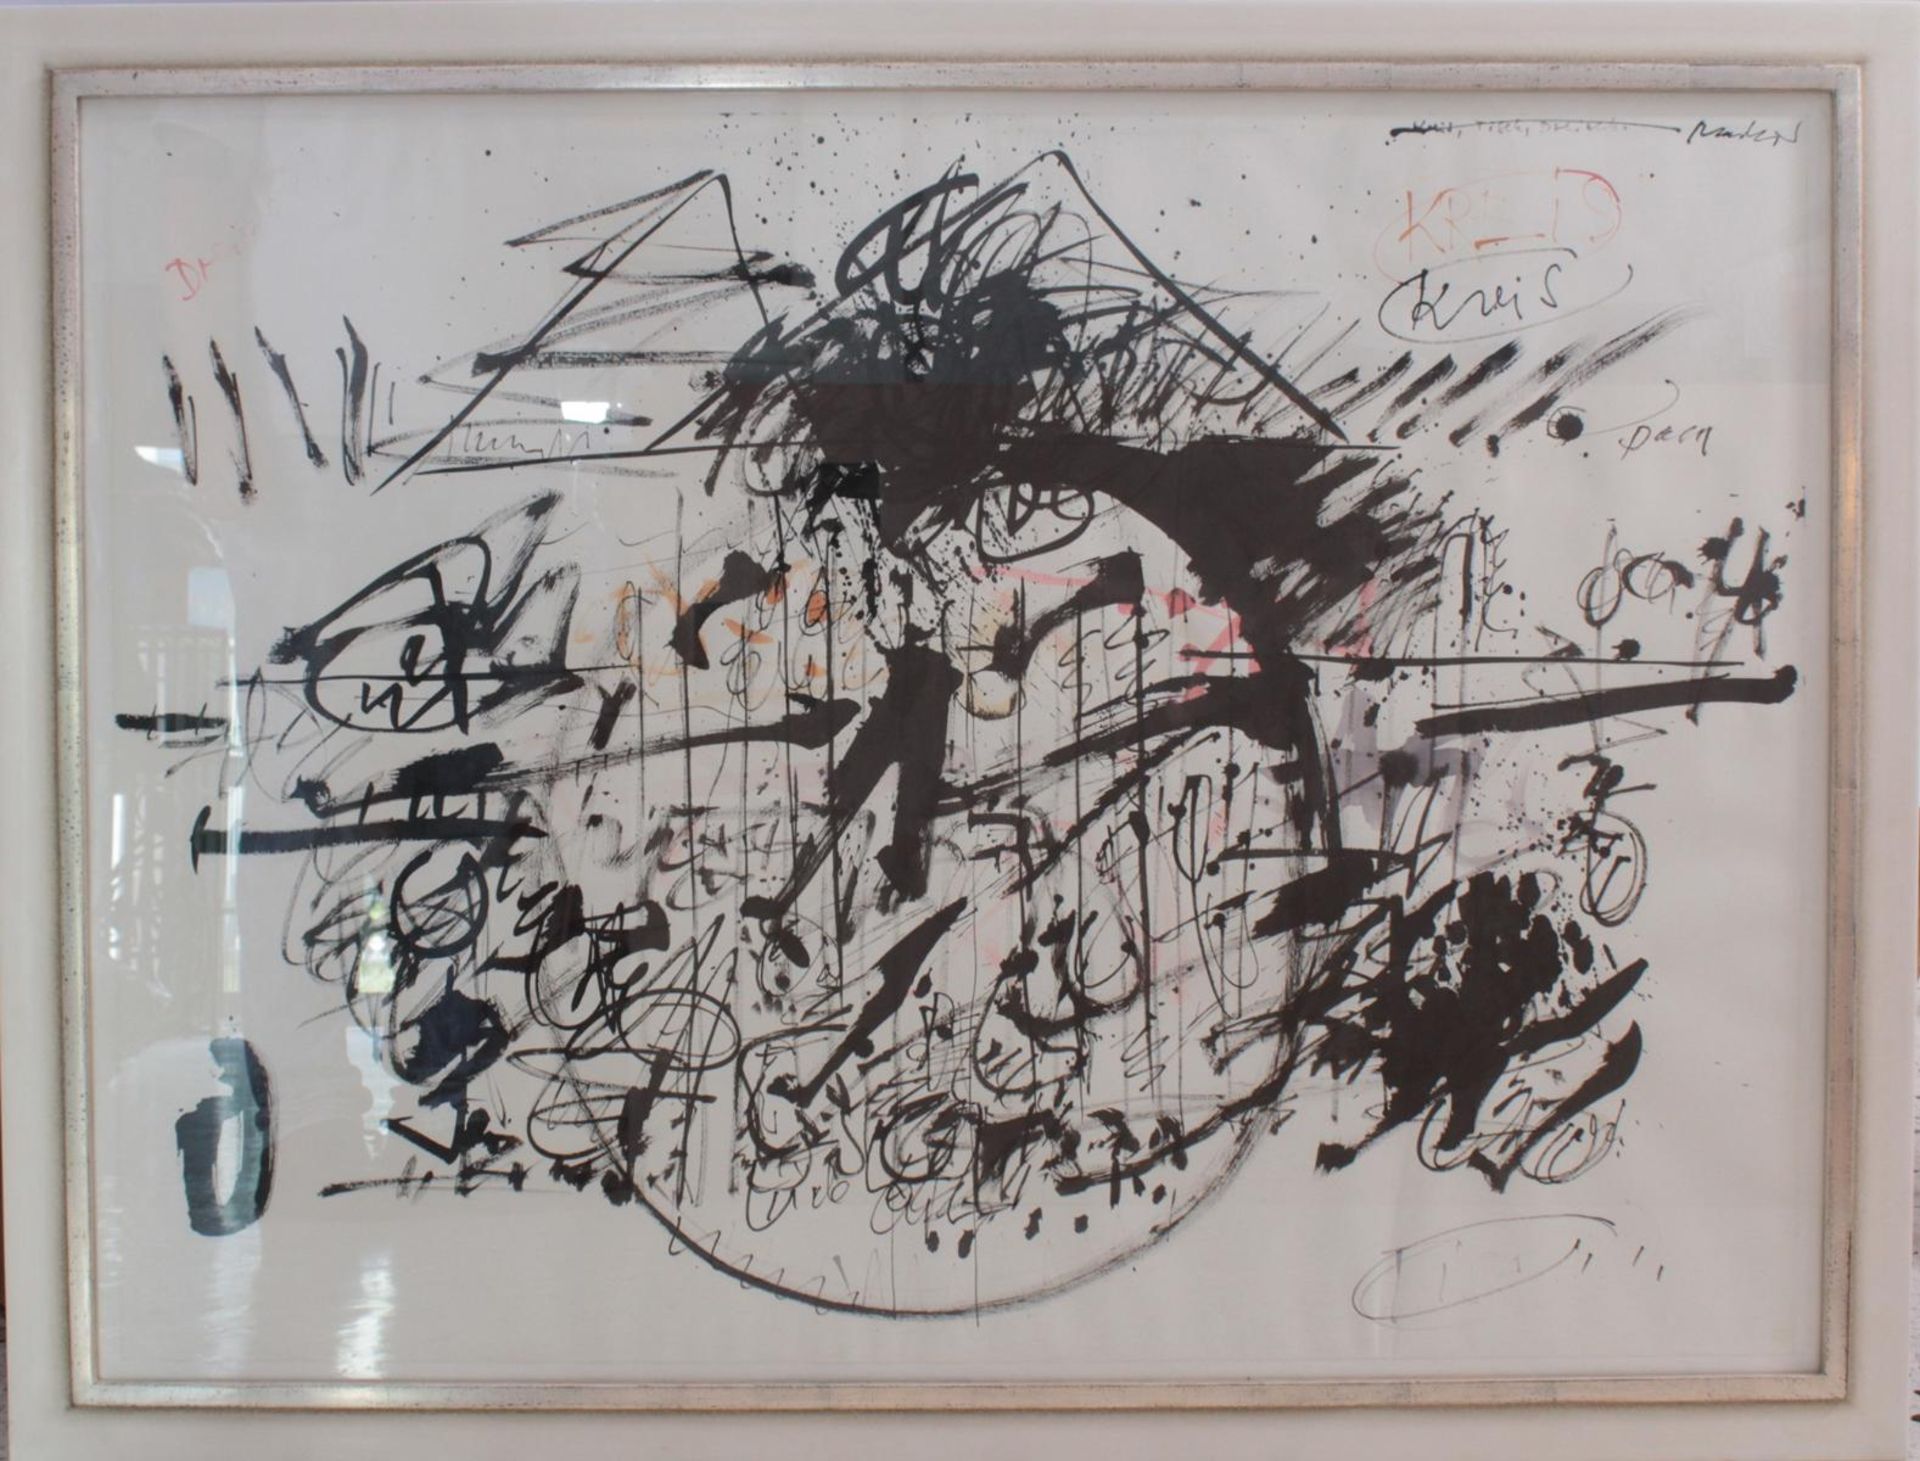 Frank Gyjho (1954), Aquarell auf Papier, Kreis-Tisch-Dreieck